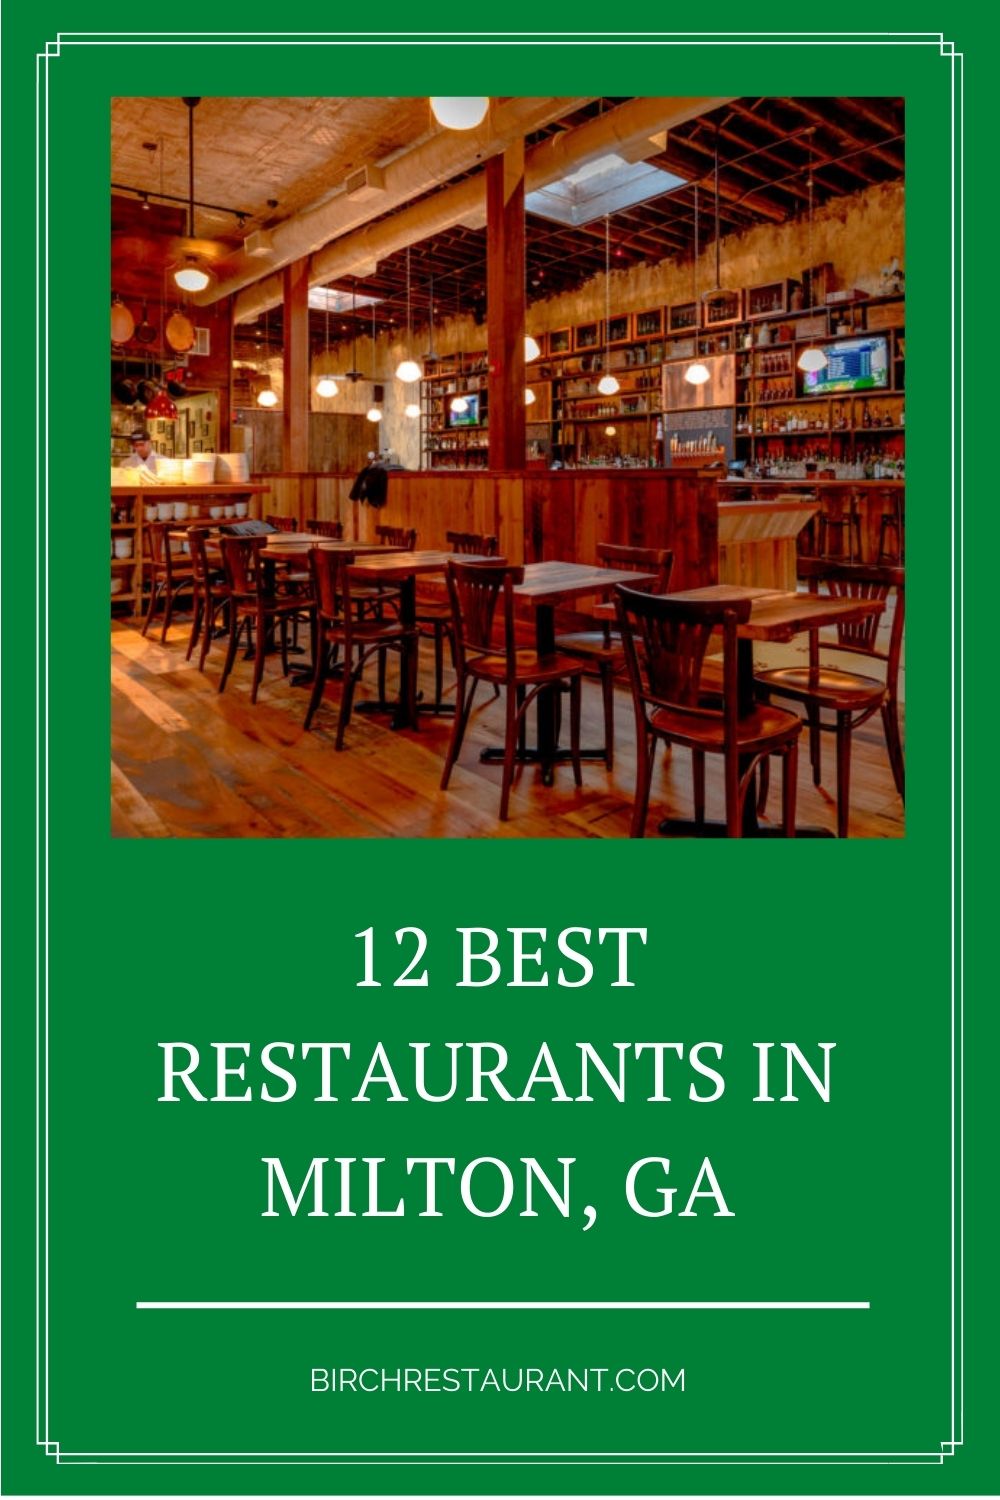 Best Restaurants in Milton